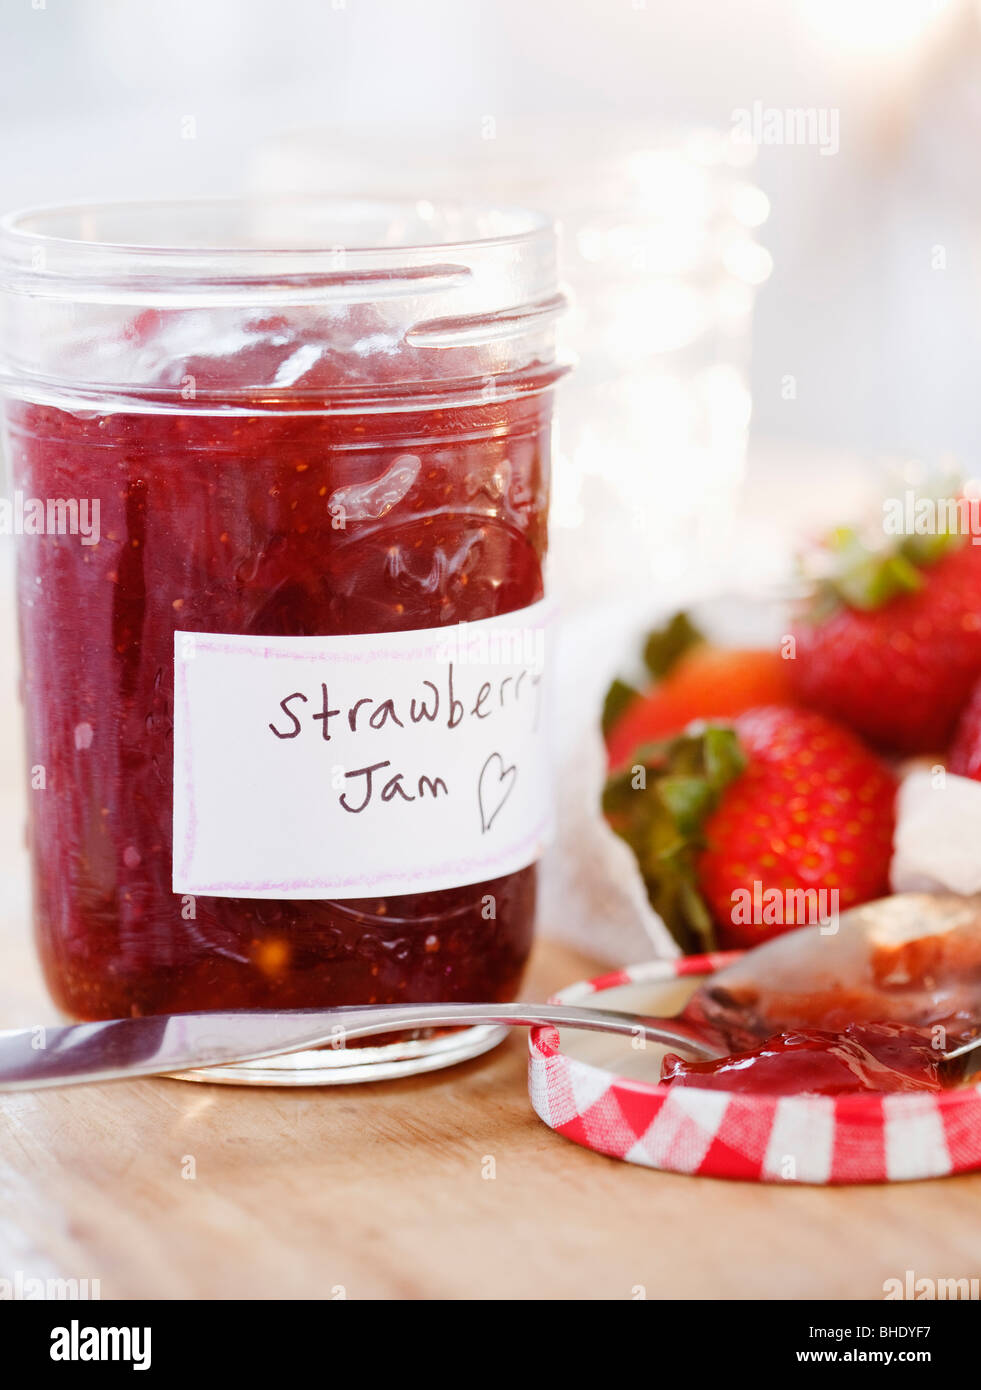 Jar of strawberry jam Stock Photo